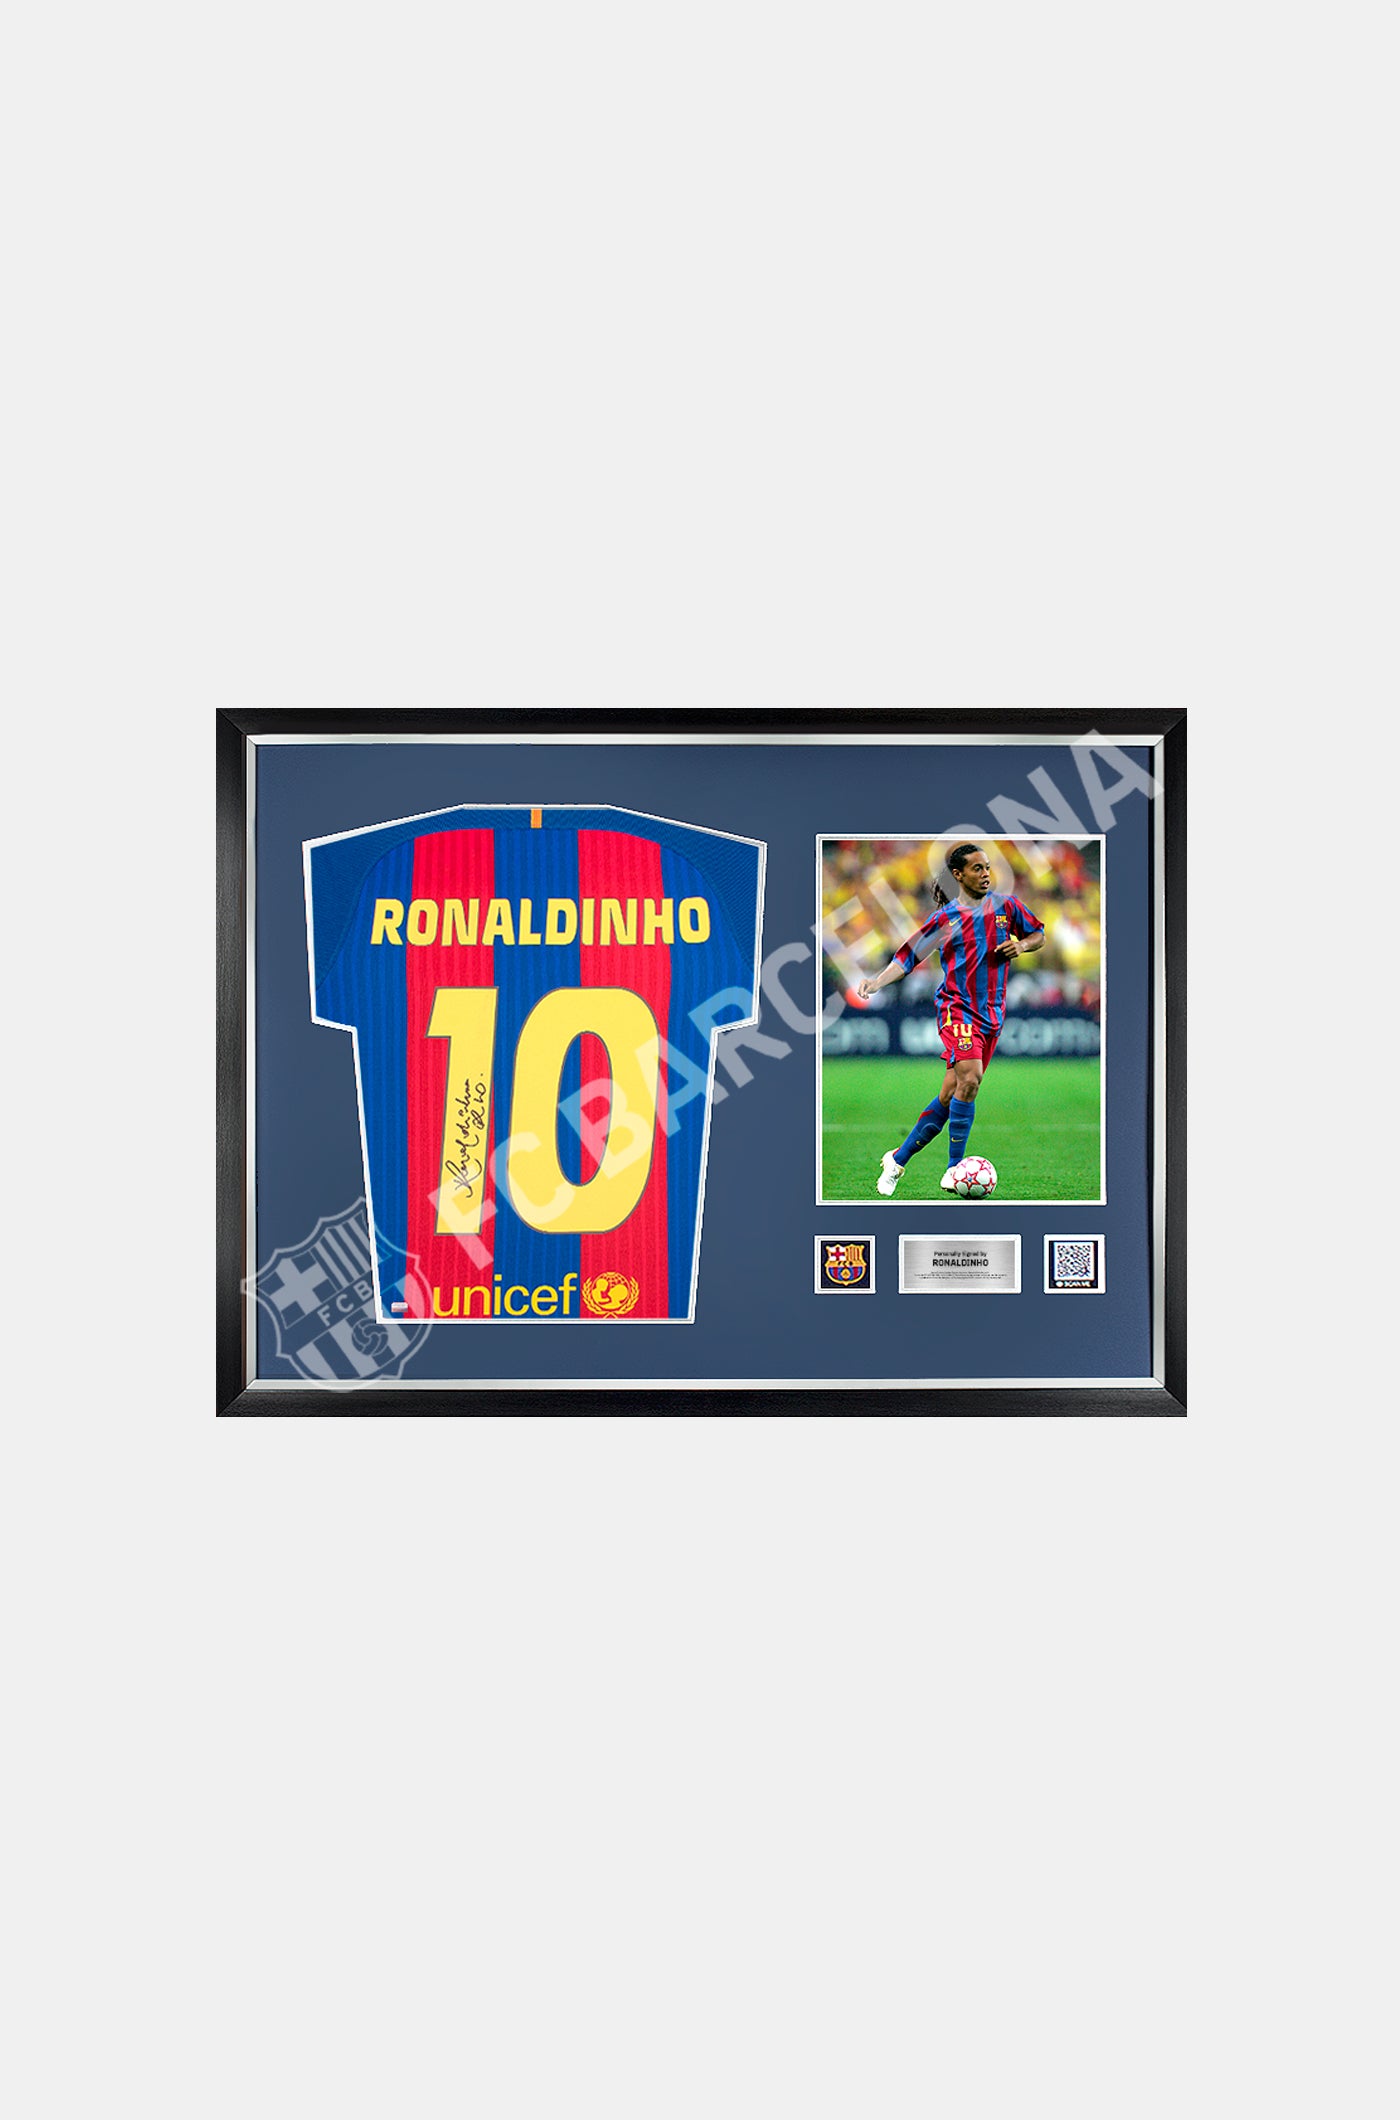 RONALDINHO | Samarreta oficial del FC Barcelona 2016-17 firmada i emmarcada per Ronaldinho